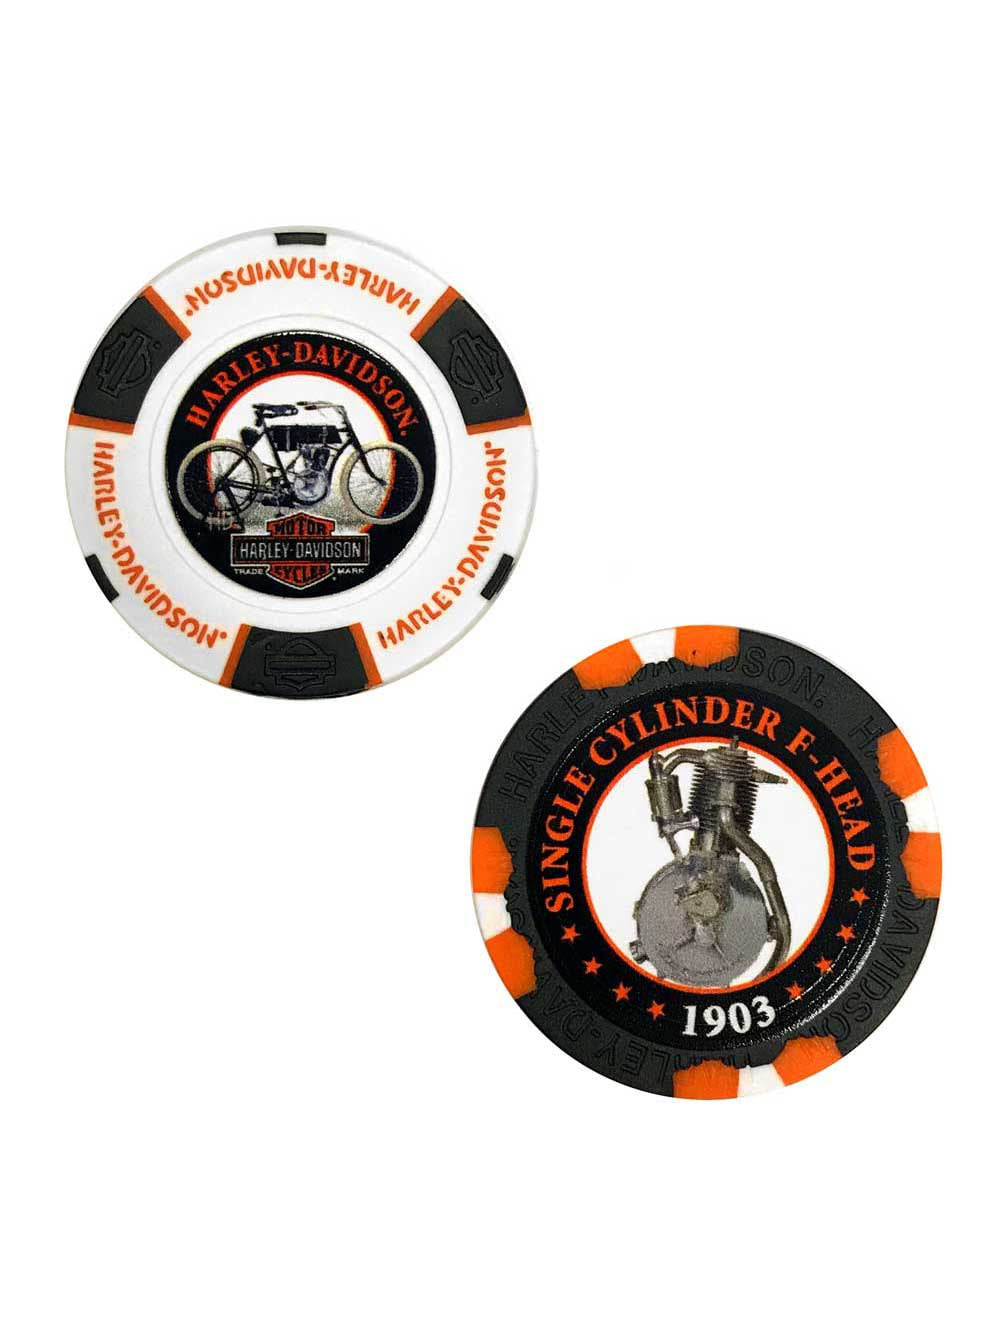 North Carolina Harley Davidson Collectable 115th Poker Chip 